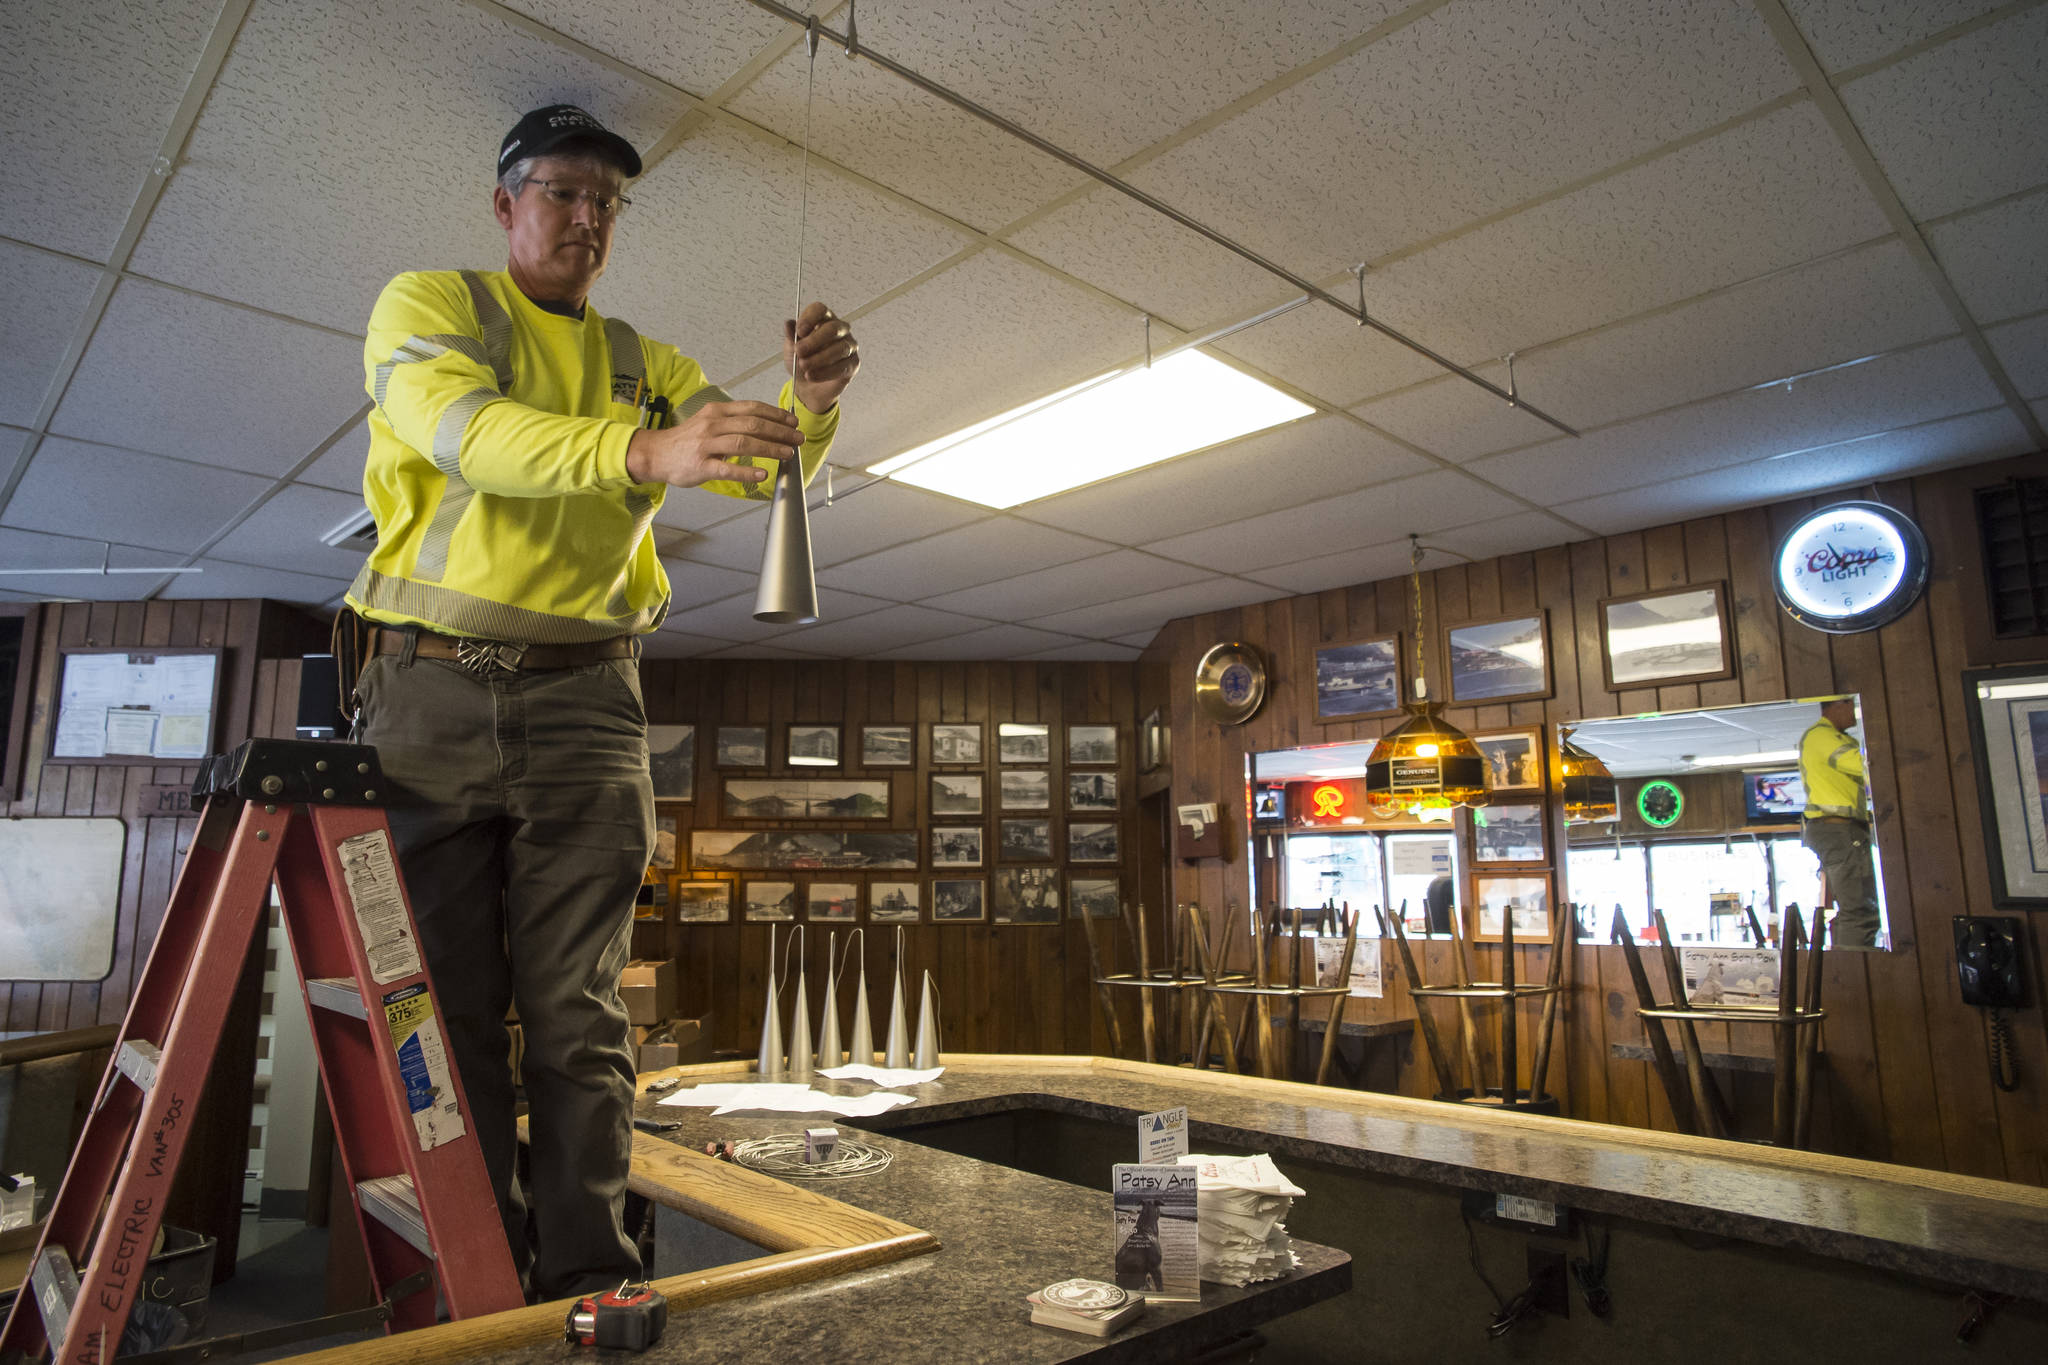 Historic bar Triangle Club undergoes renovations